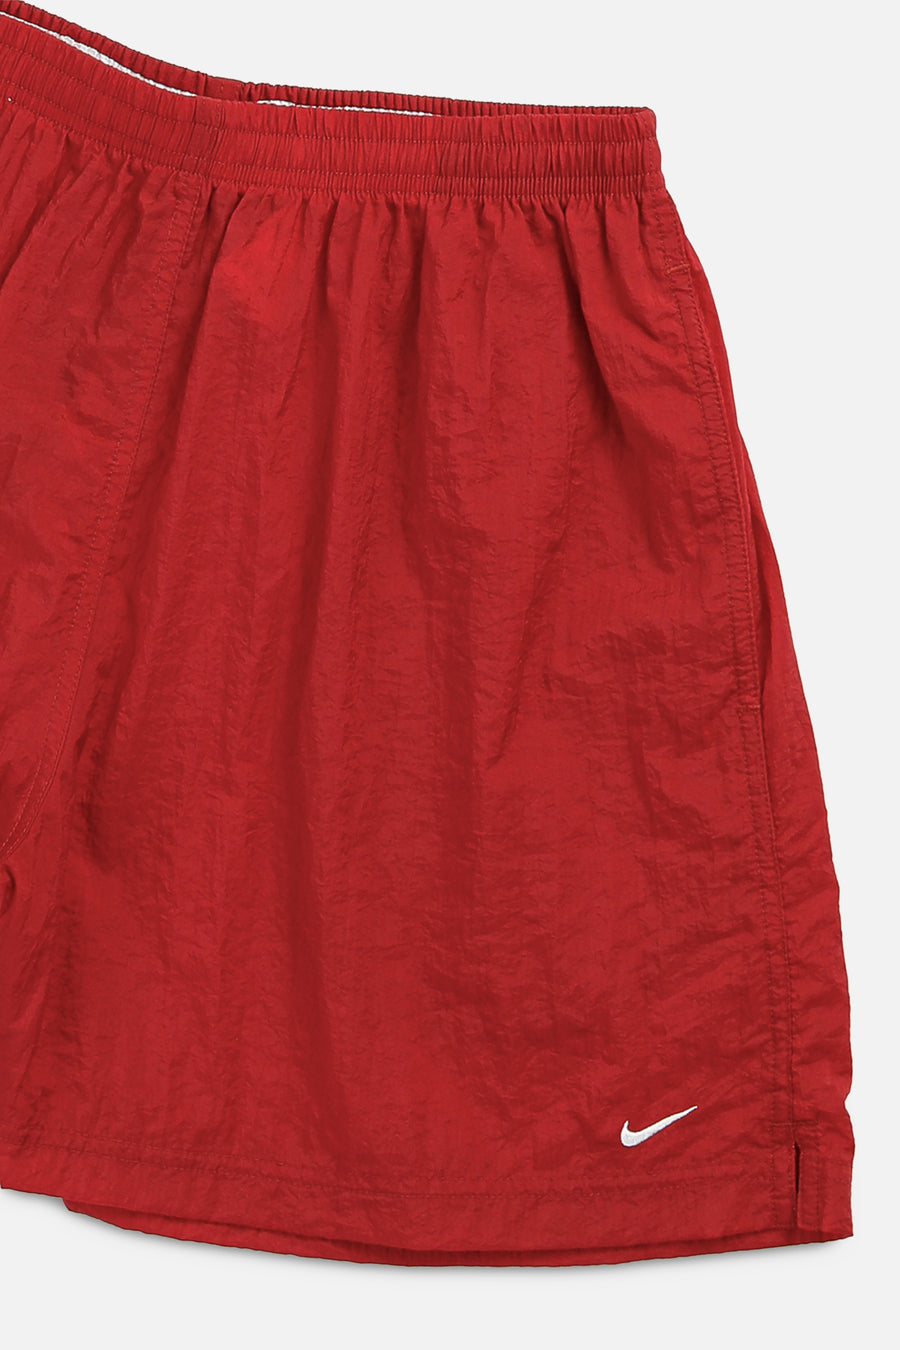 Vintage Nike Shorts - Women's XL